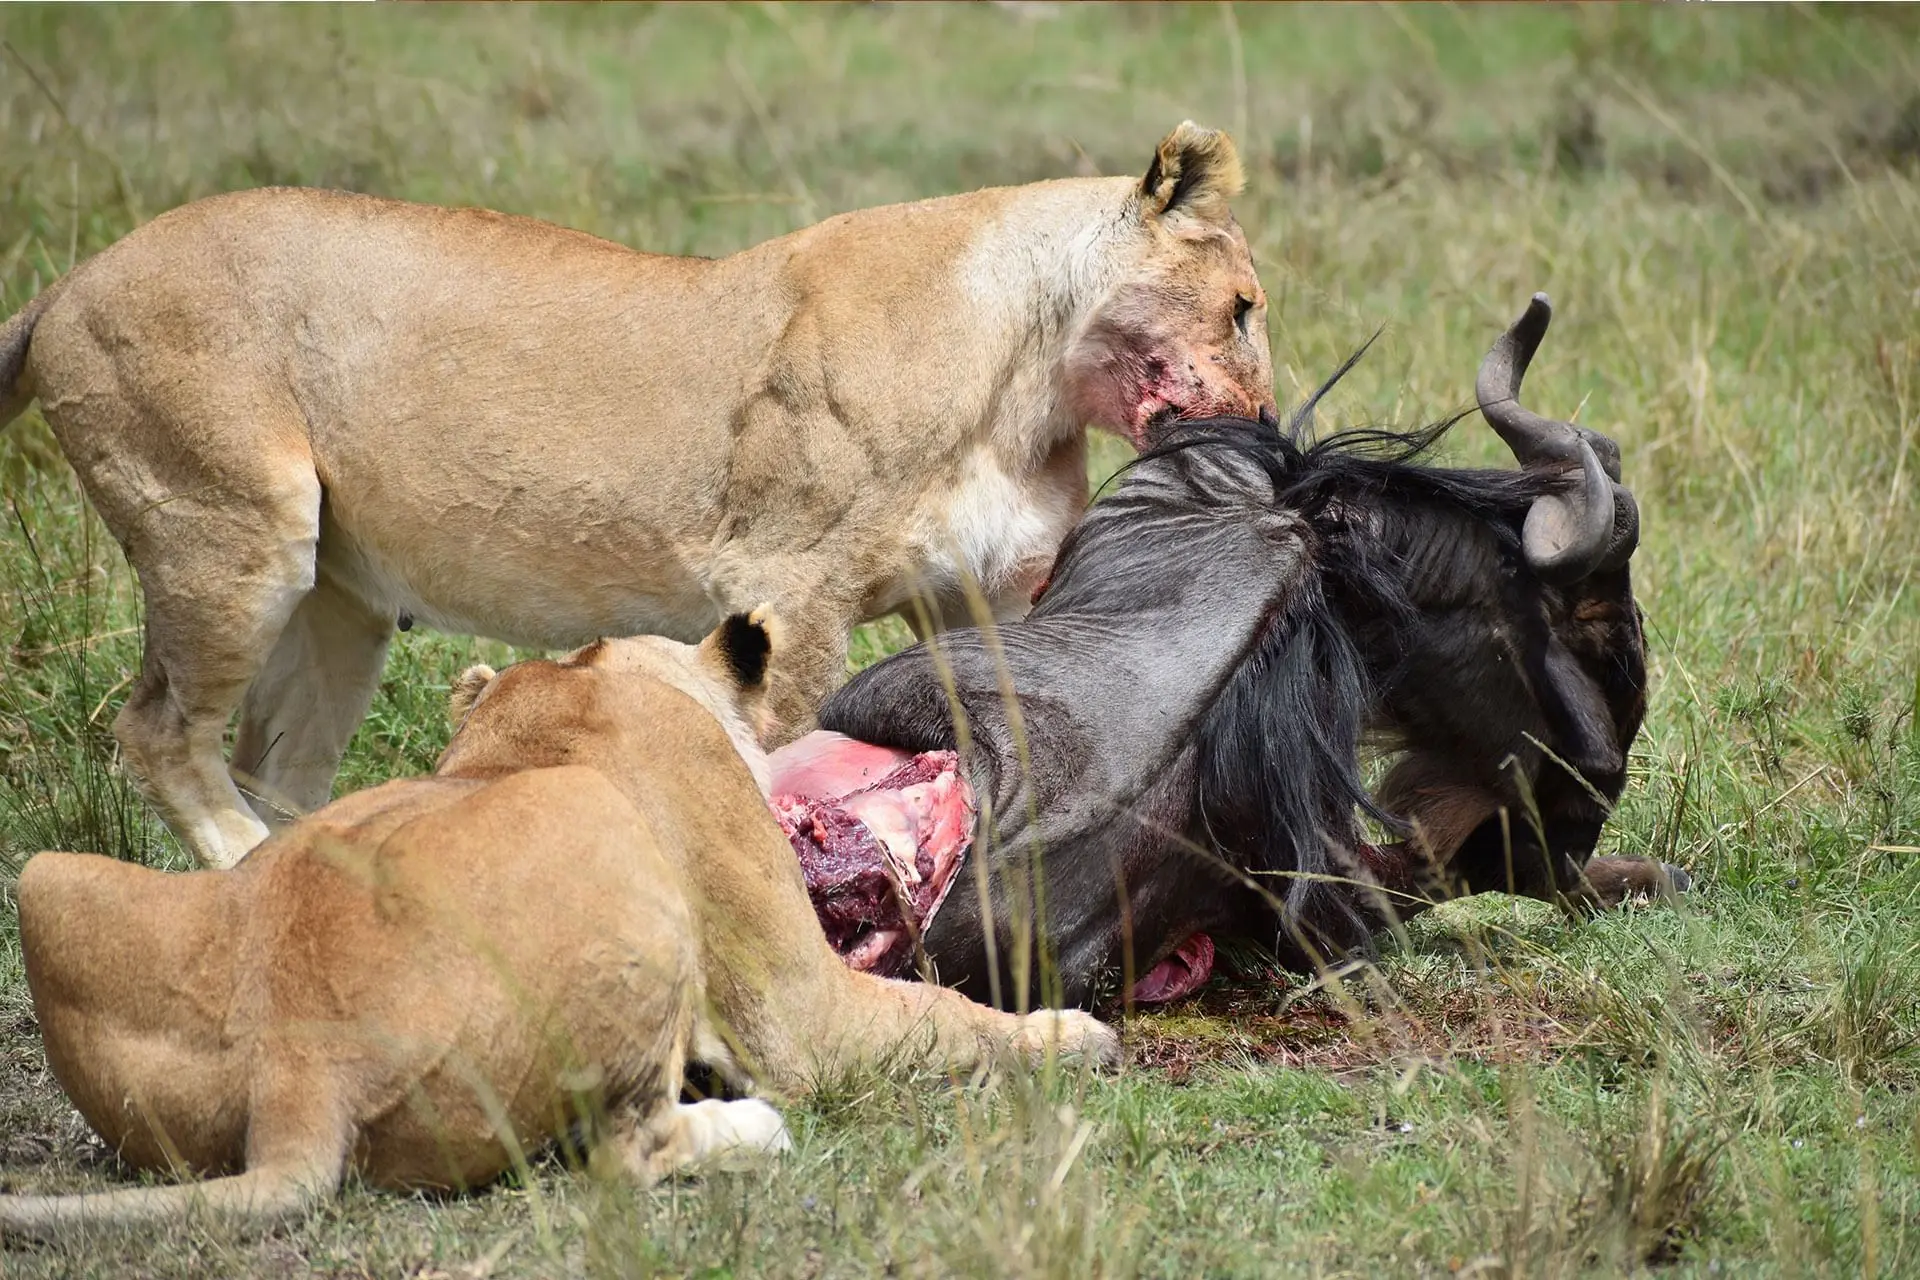 Unique wildlife encounters Kenya - Lions in Masai Mara National Park Kenya.